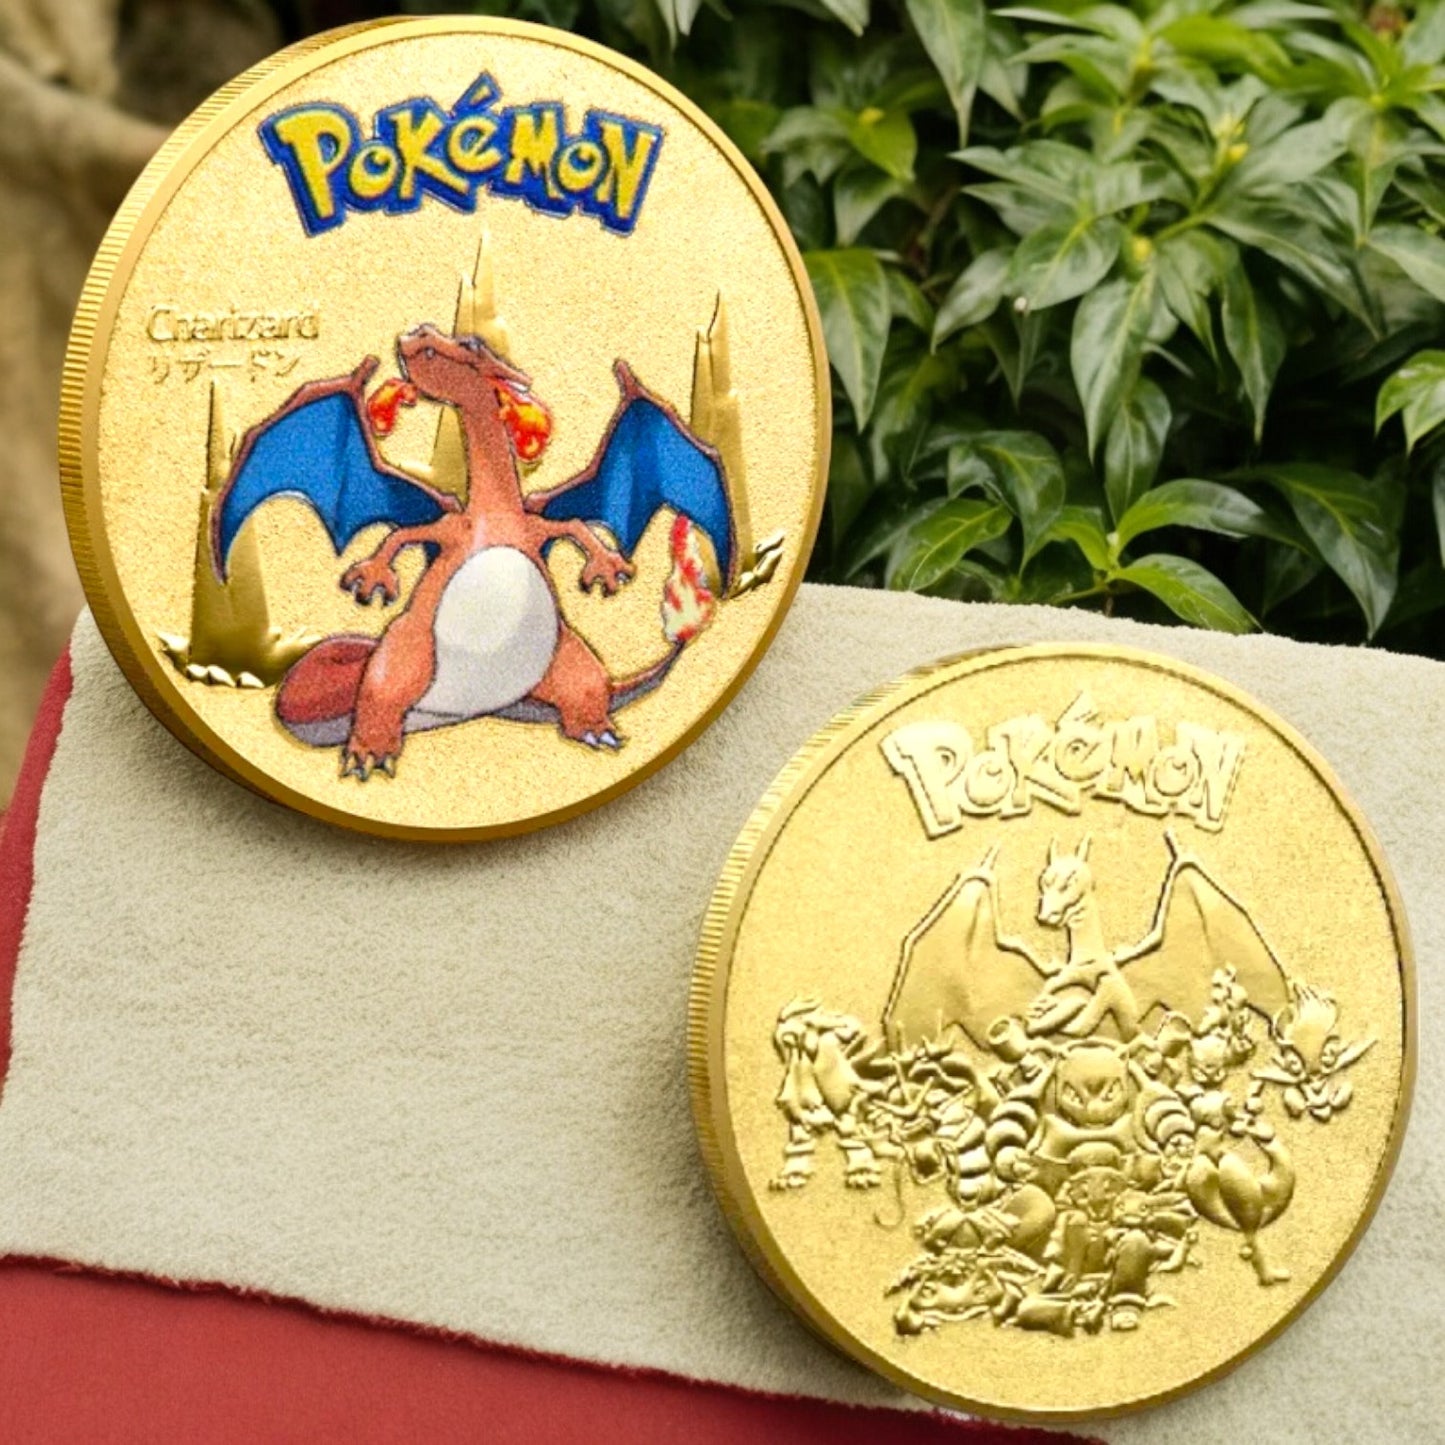 Pokémon Commemorative Coin